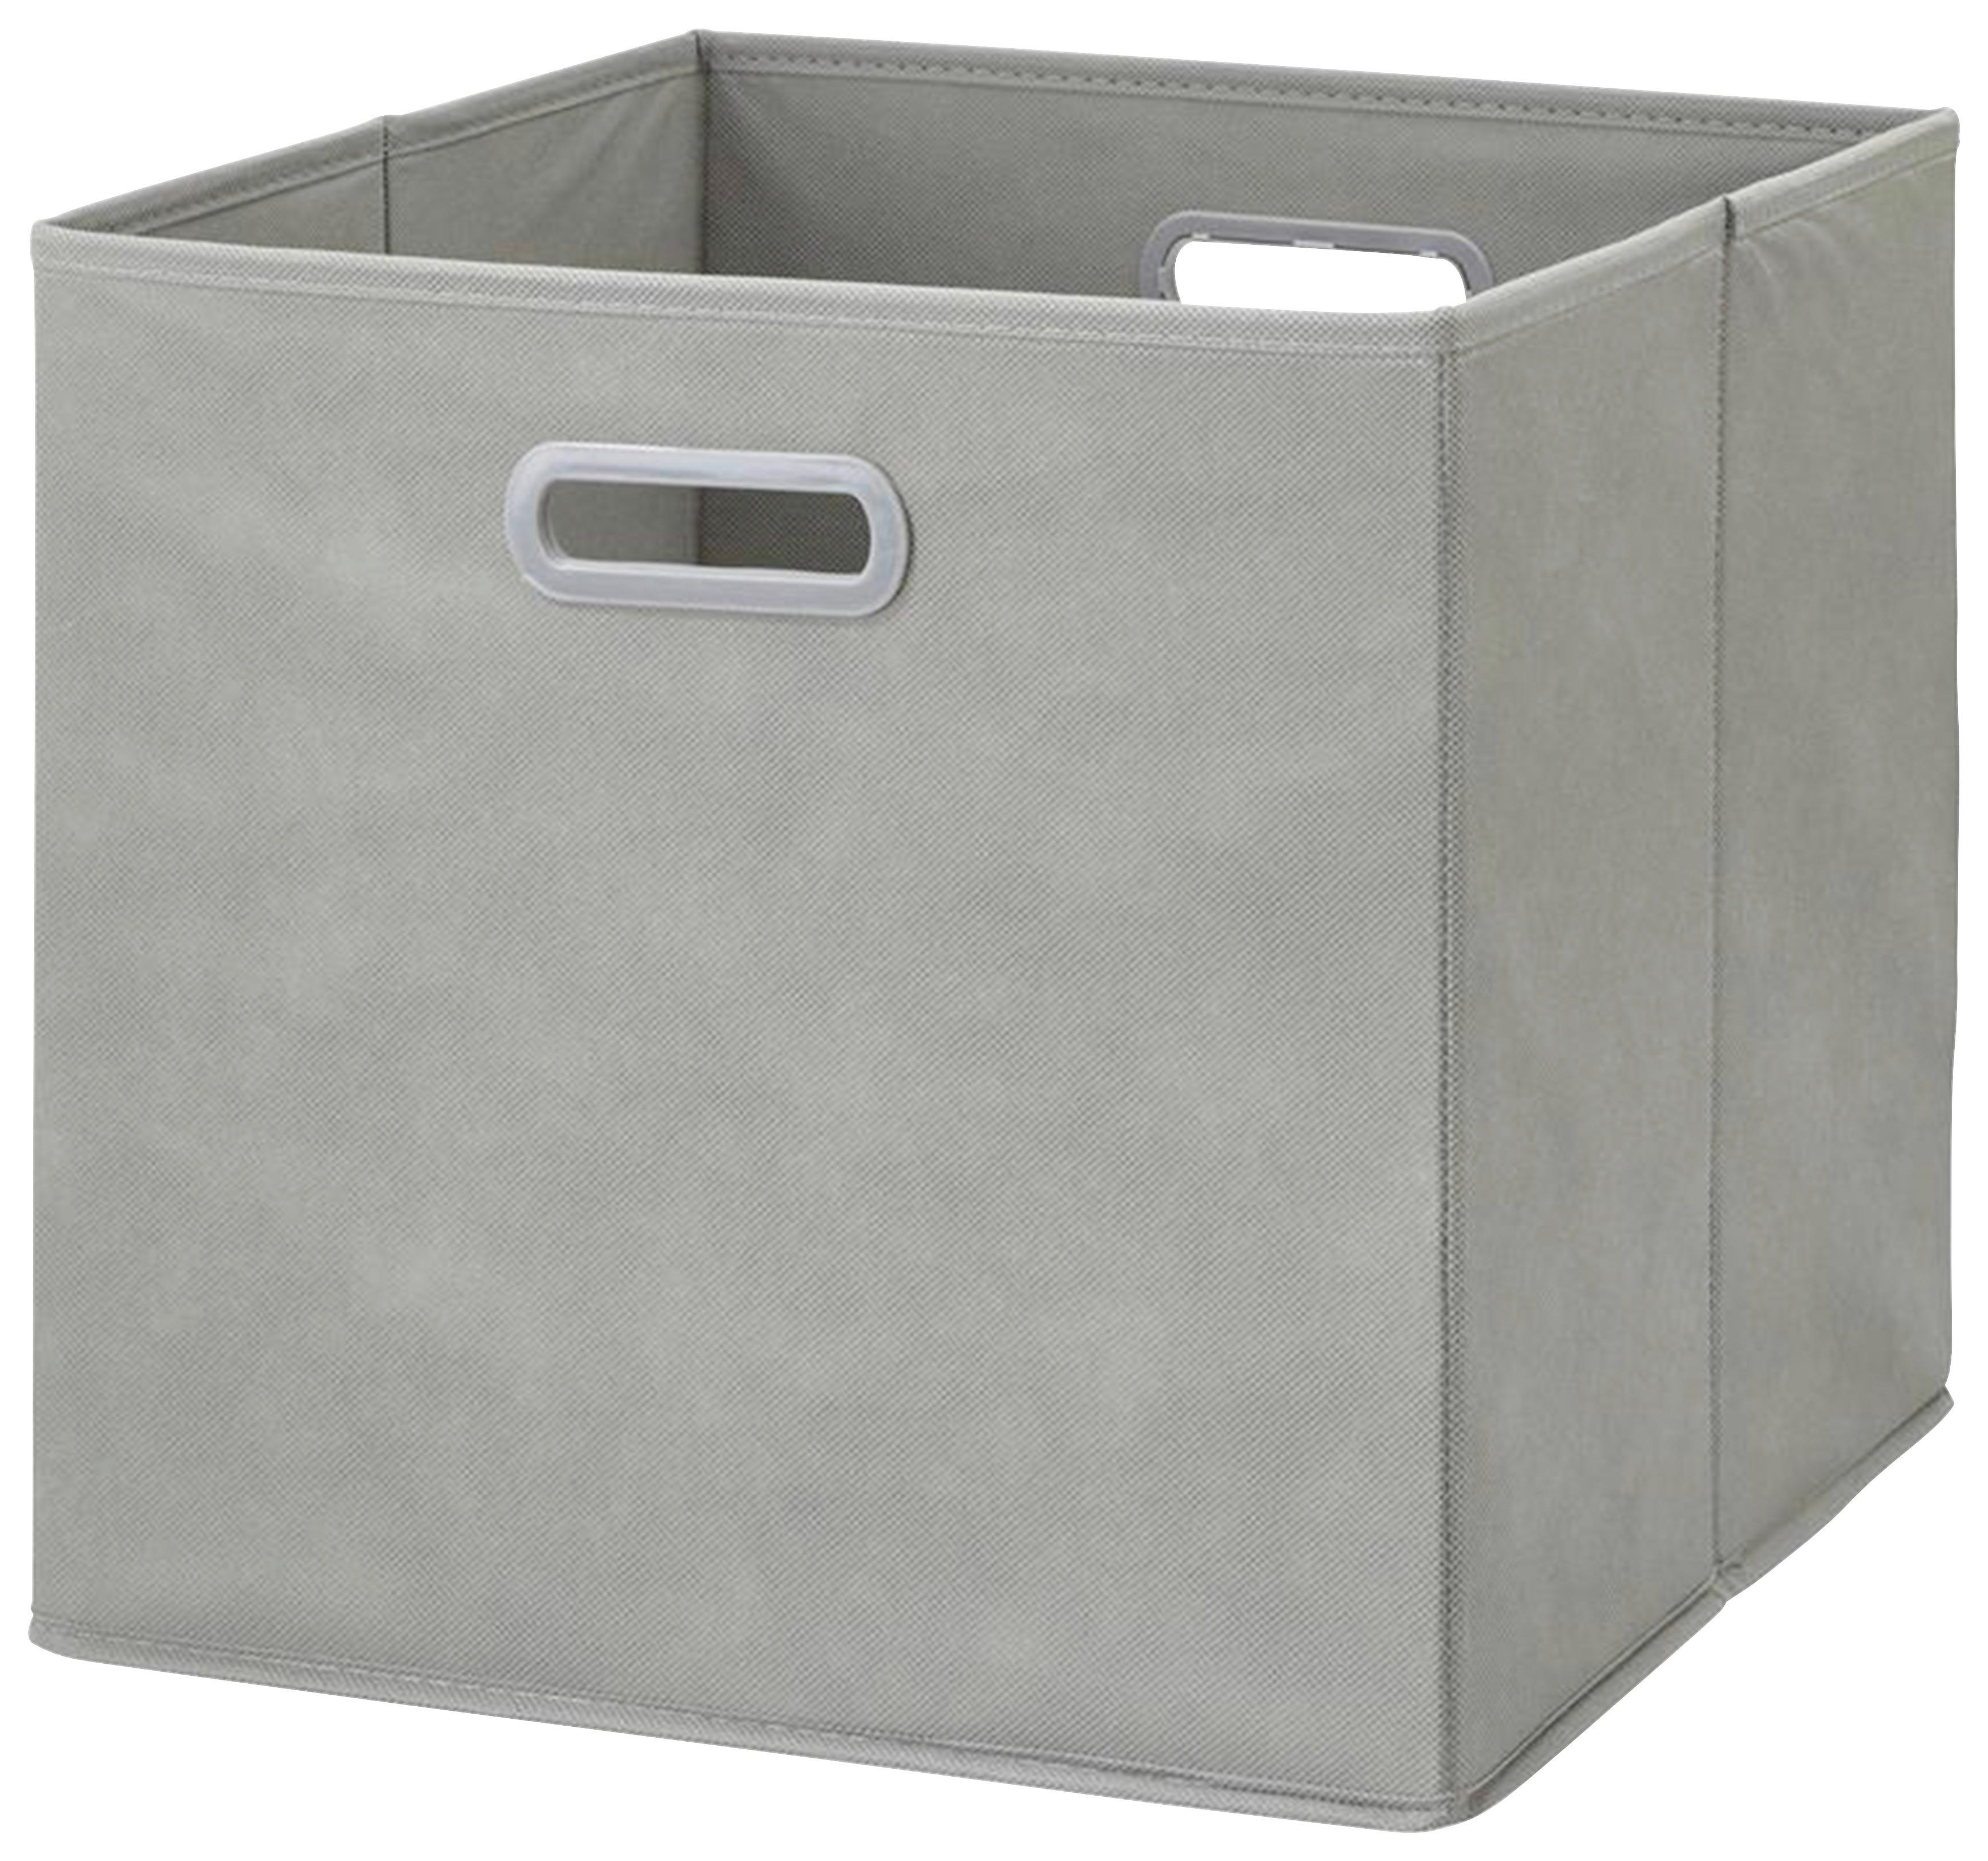 Faltbox Elli in Grau - Grau, Konventionell, Karton/Textil (33/33/32cm) - Modern Living